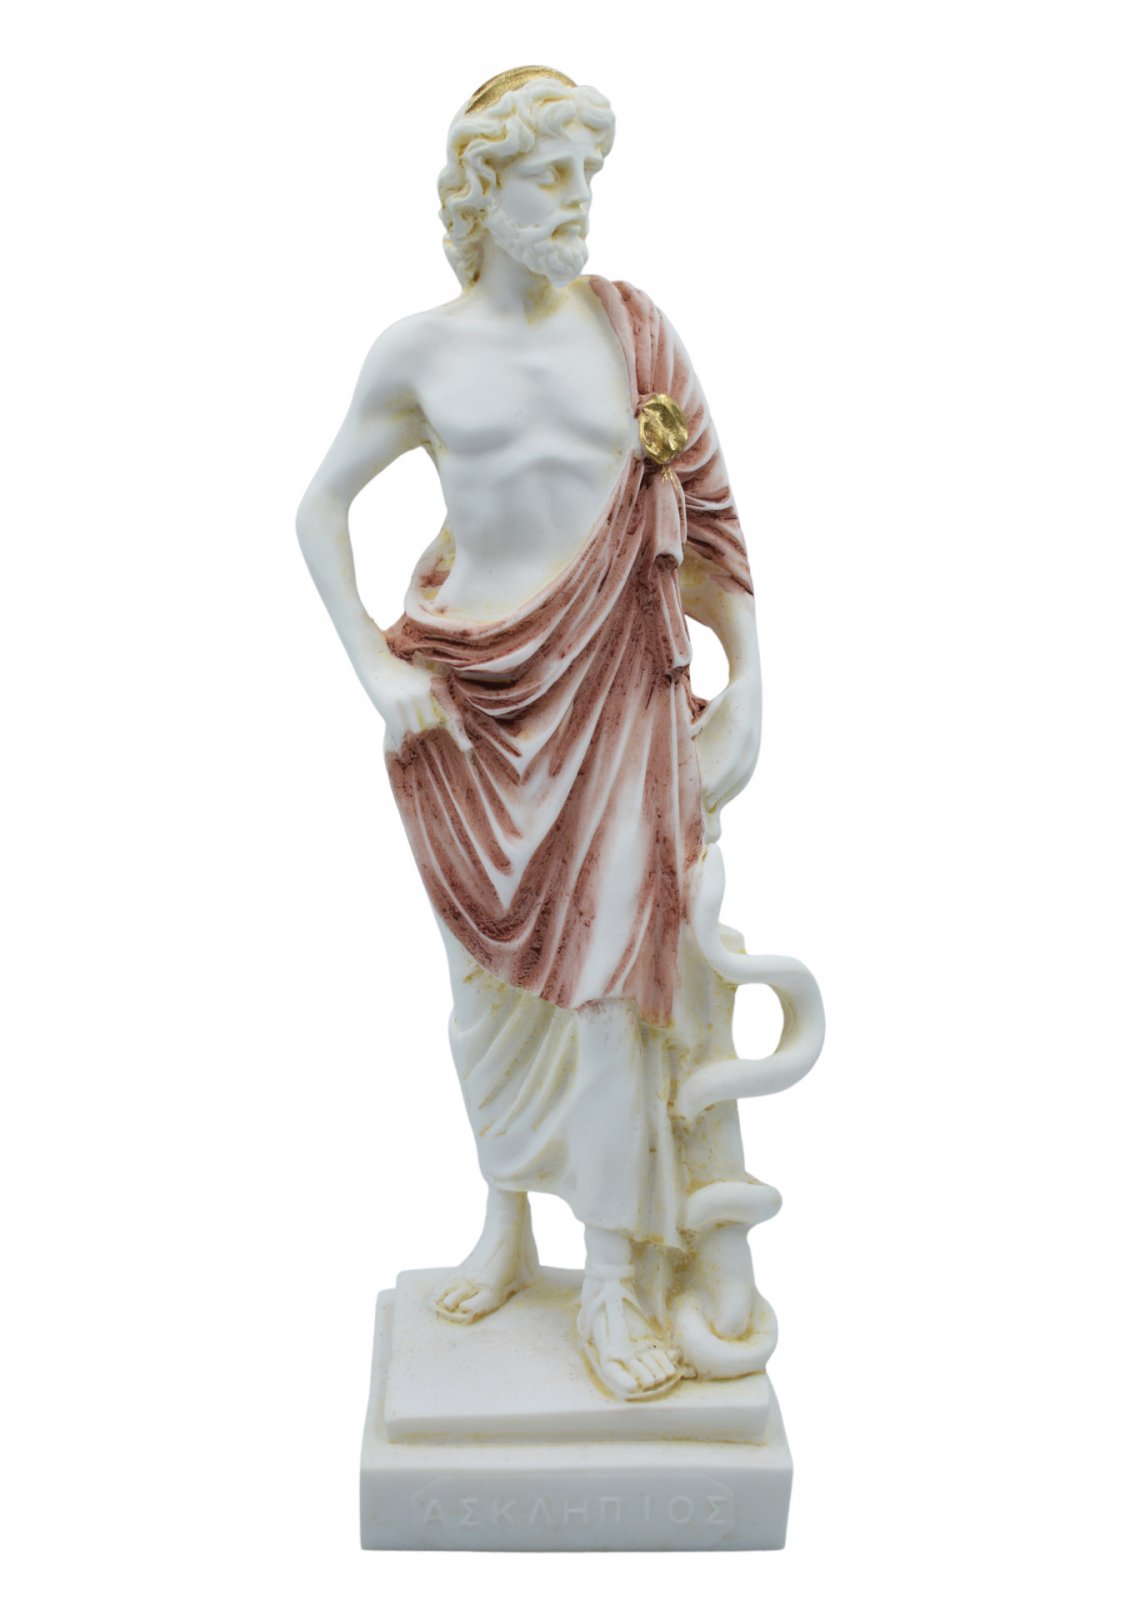  Ascelpius (Asklepios), the greek god of medicine, alabaster statue with color and patina